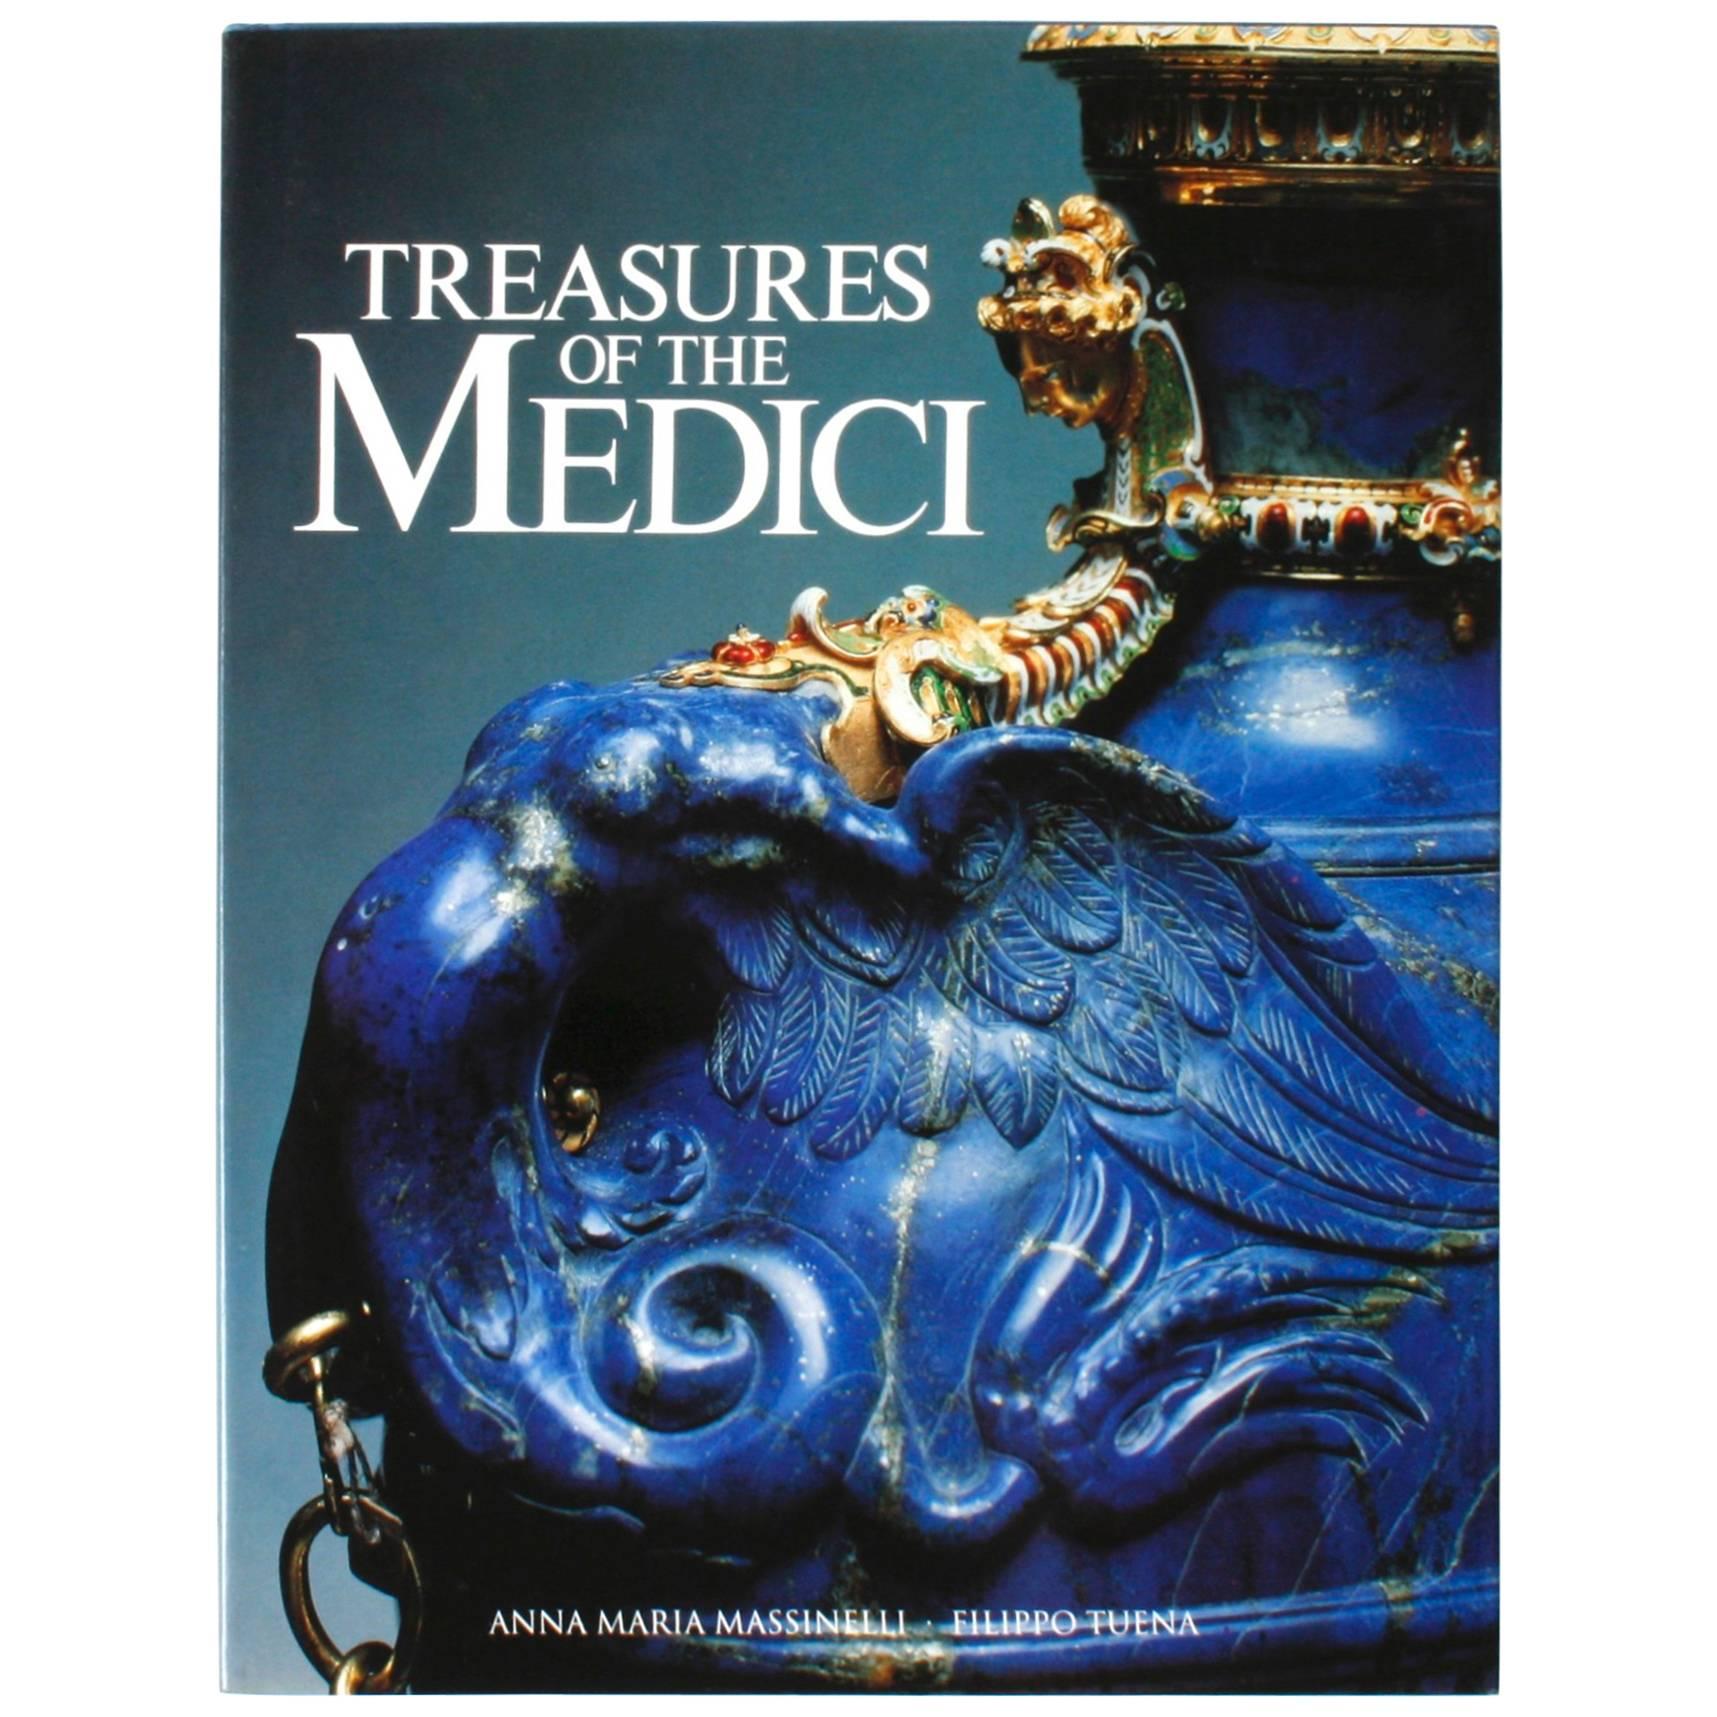 Treasures of the Medici